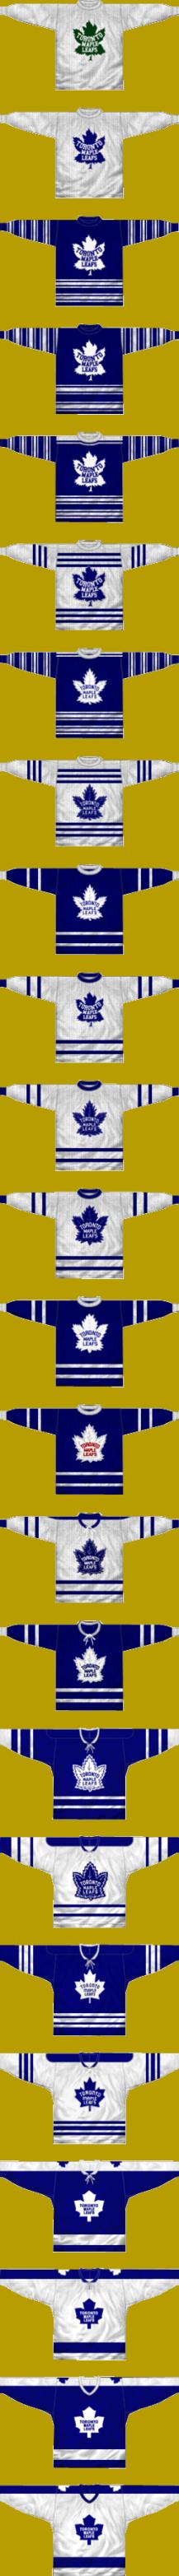 Toronto Maple Leafs Jersey Evolution Clock